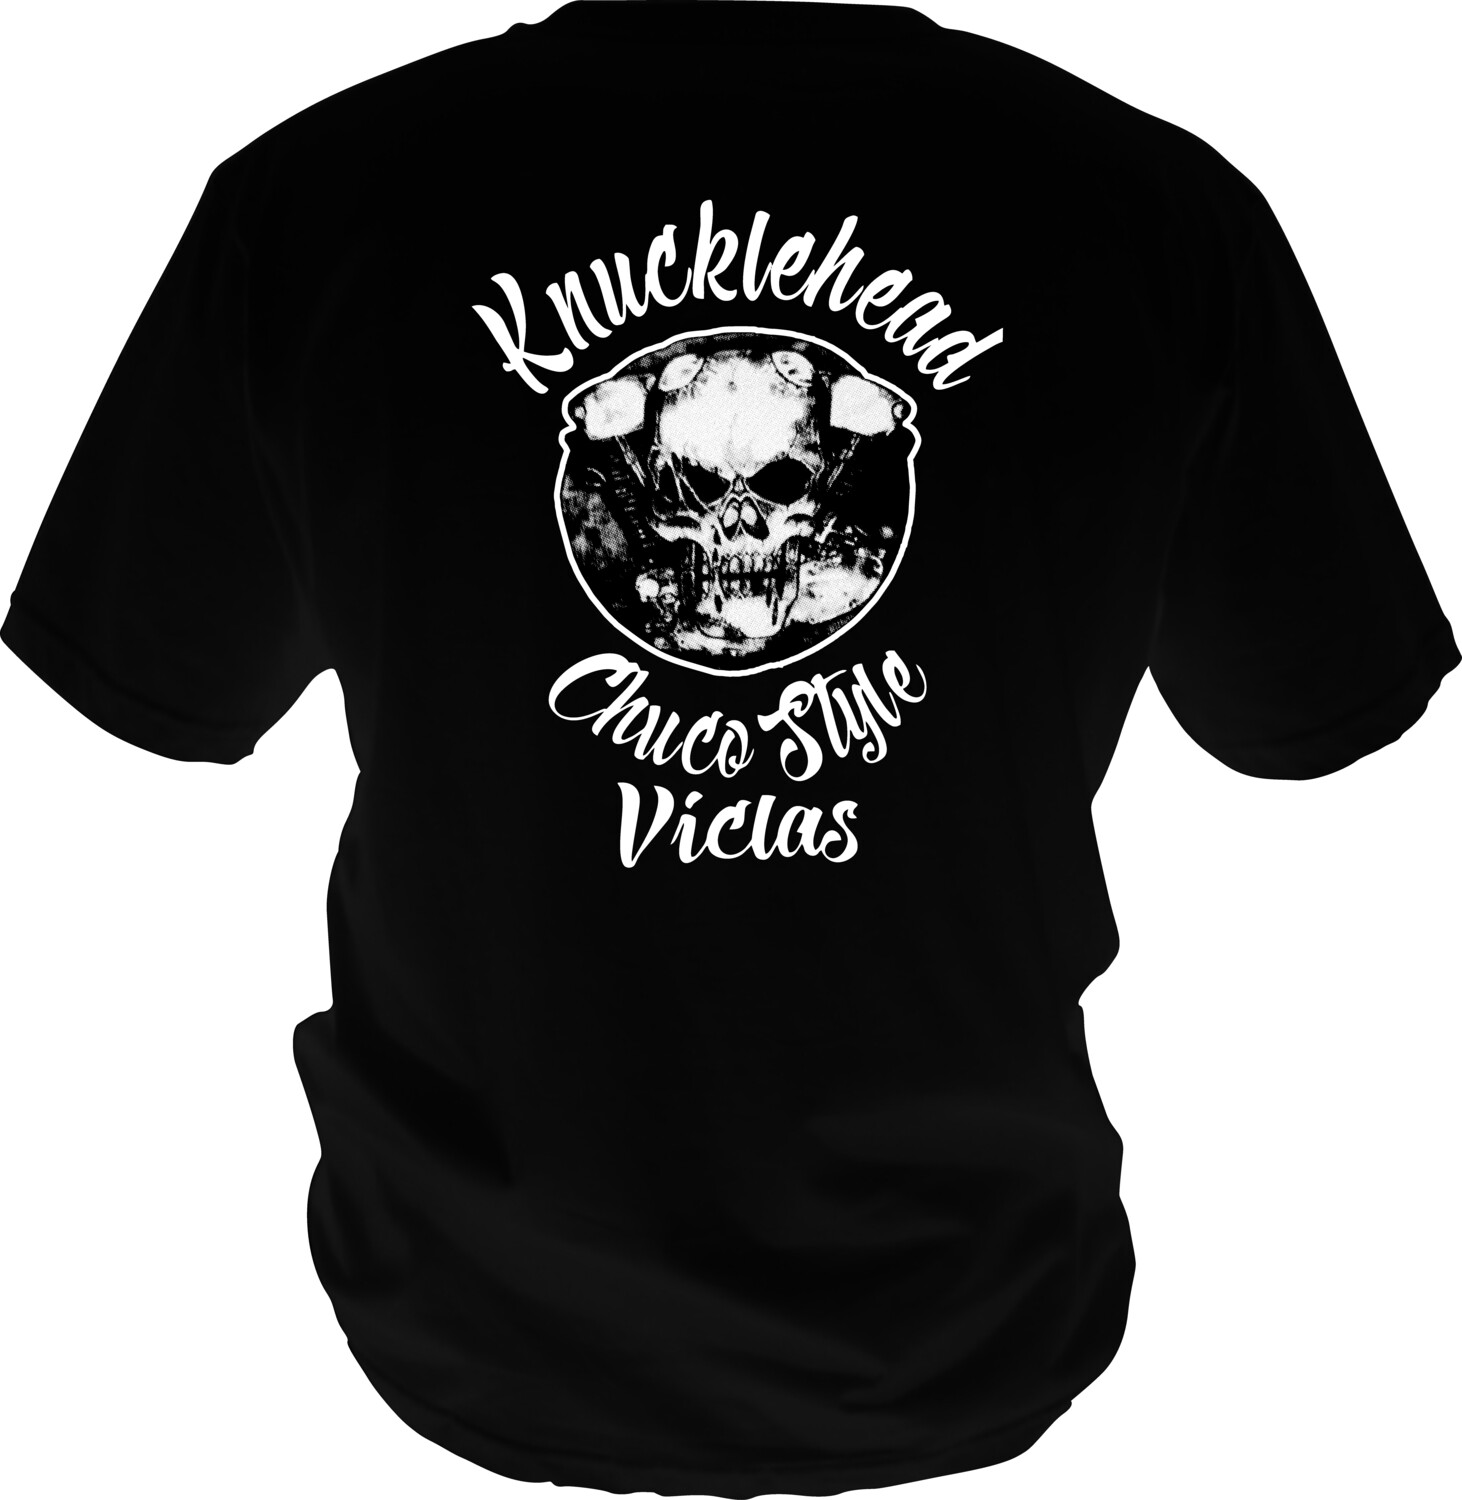 Knuckle Head Motorcycle shop T